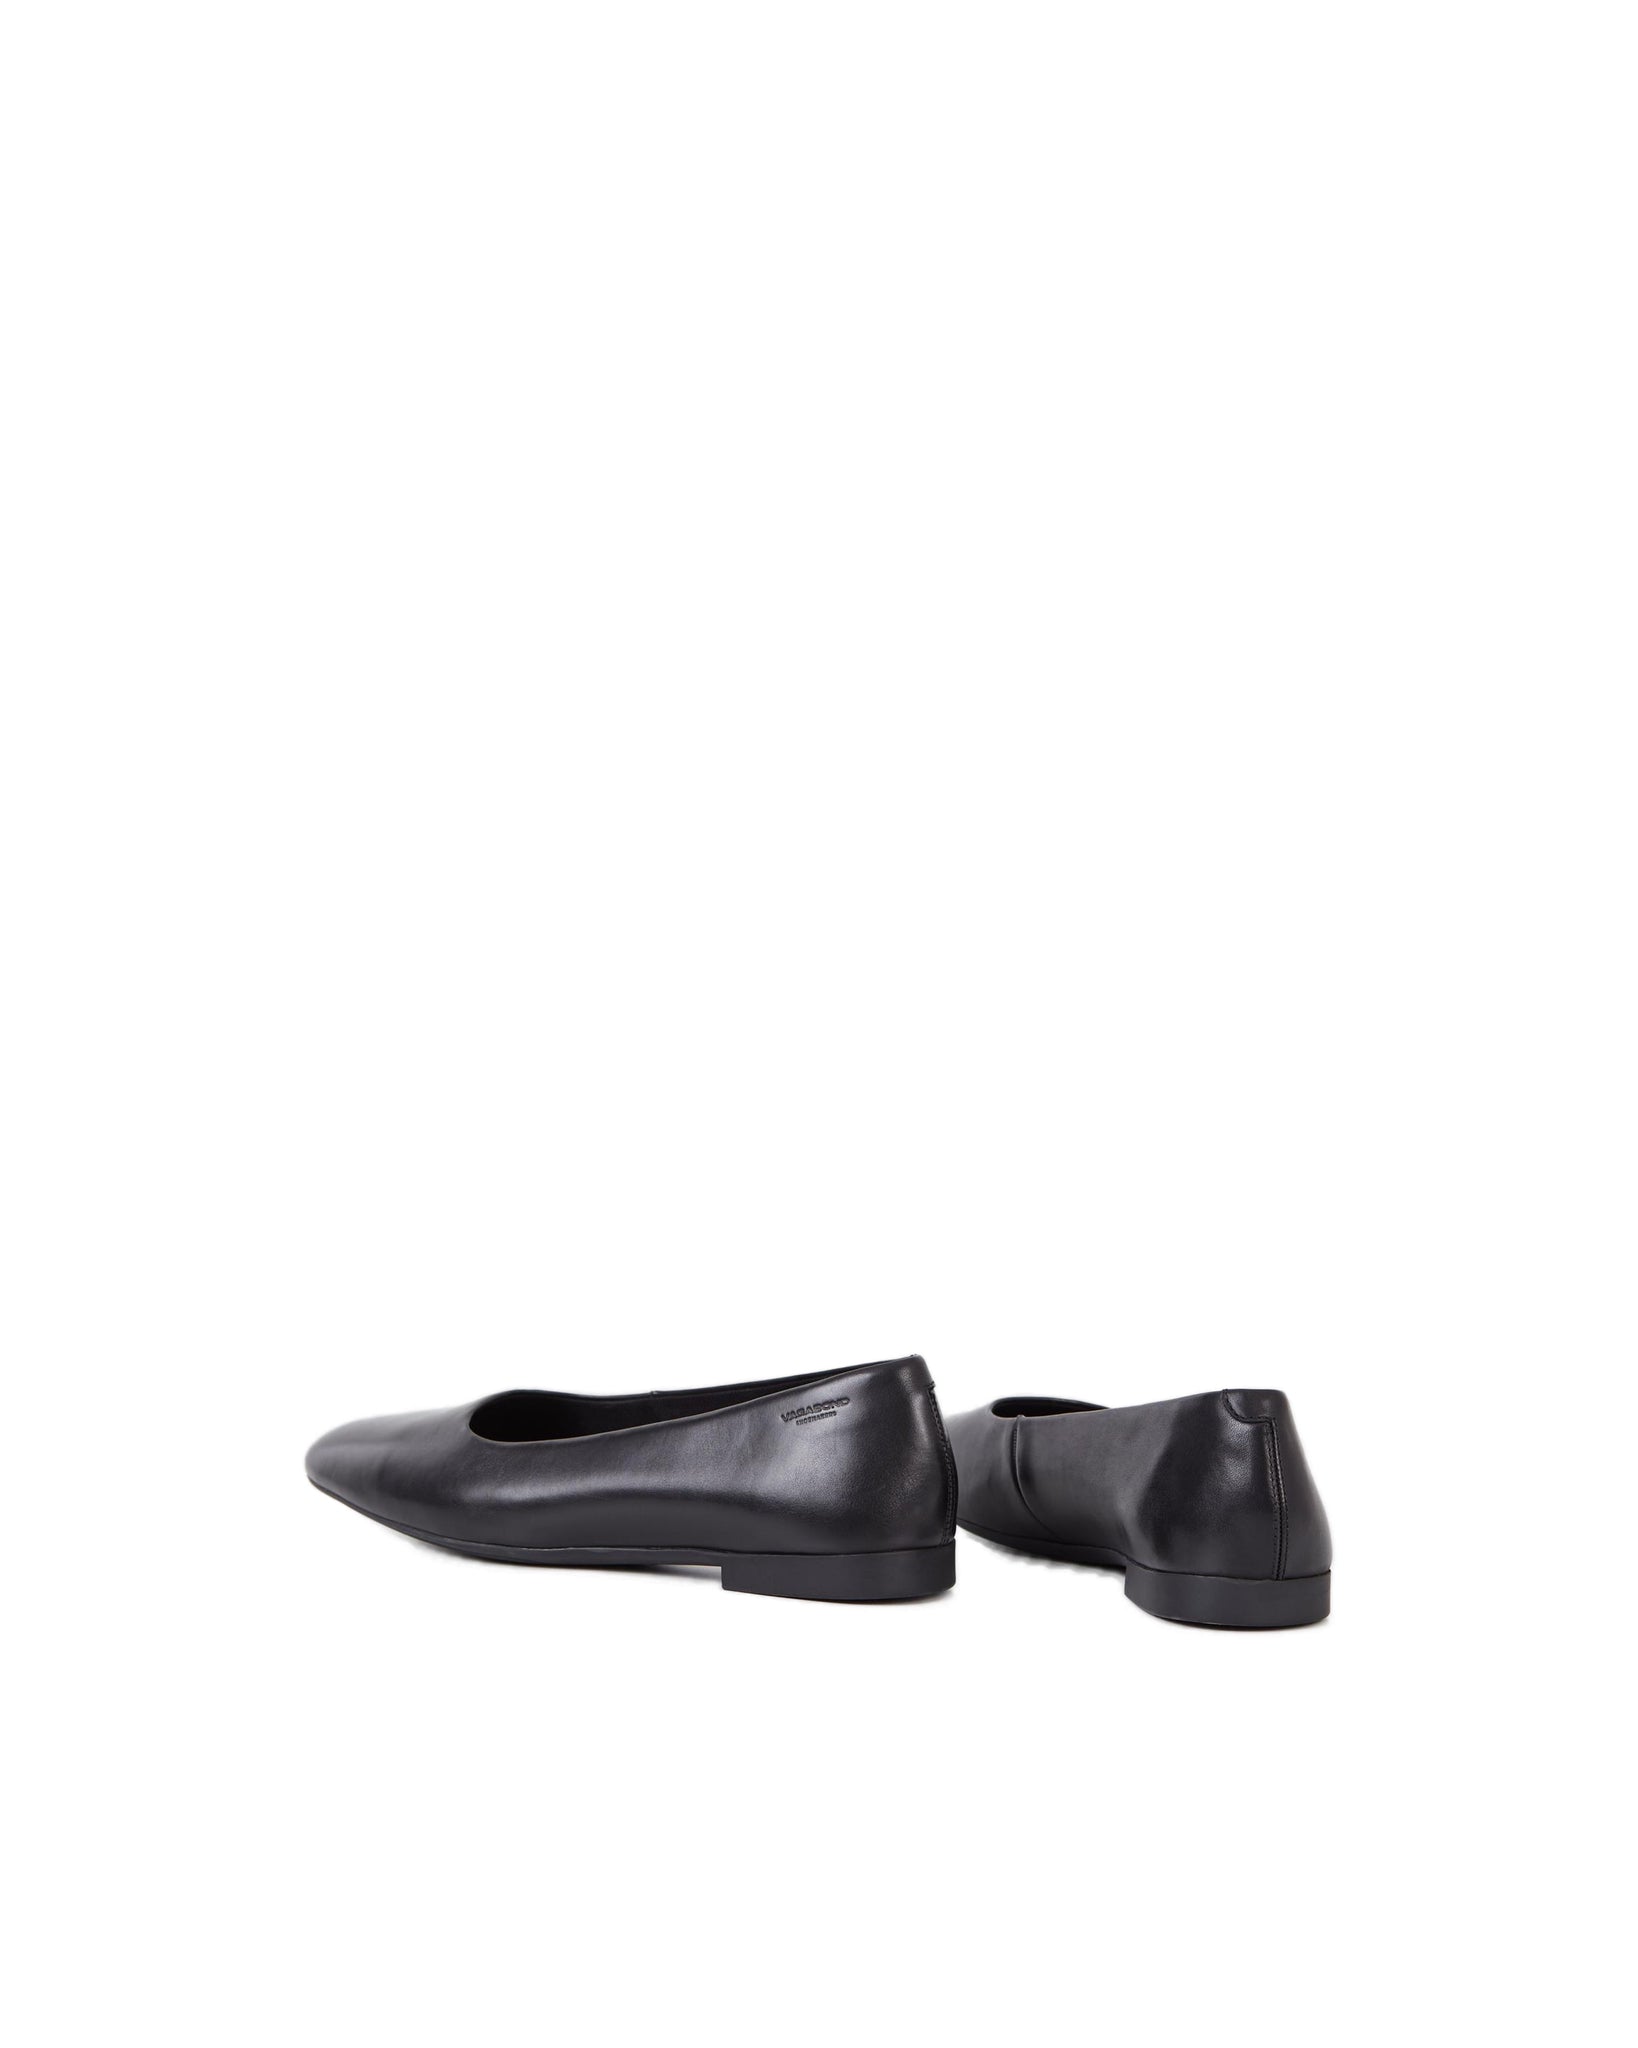 Zapatos Sibel (5758-201-20) - Negro